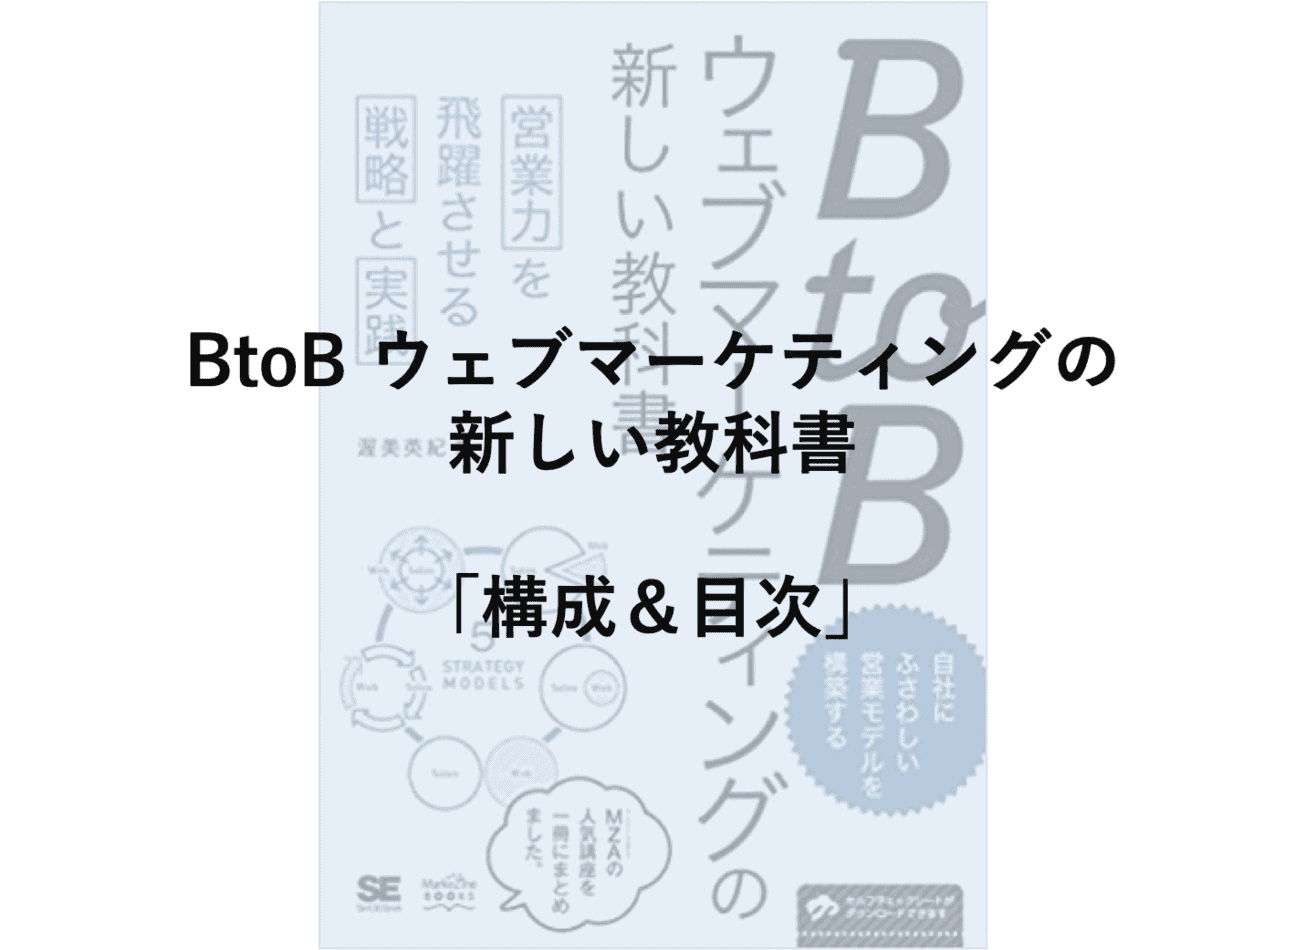 BtoBウェブマーケティングの新しい教科書の構成や目次など